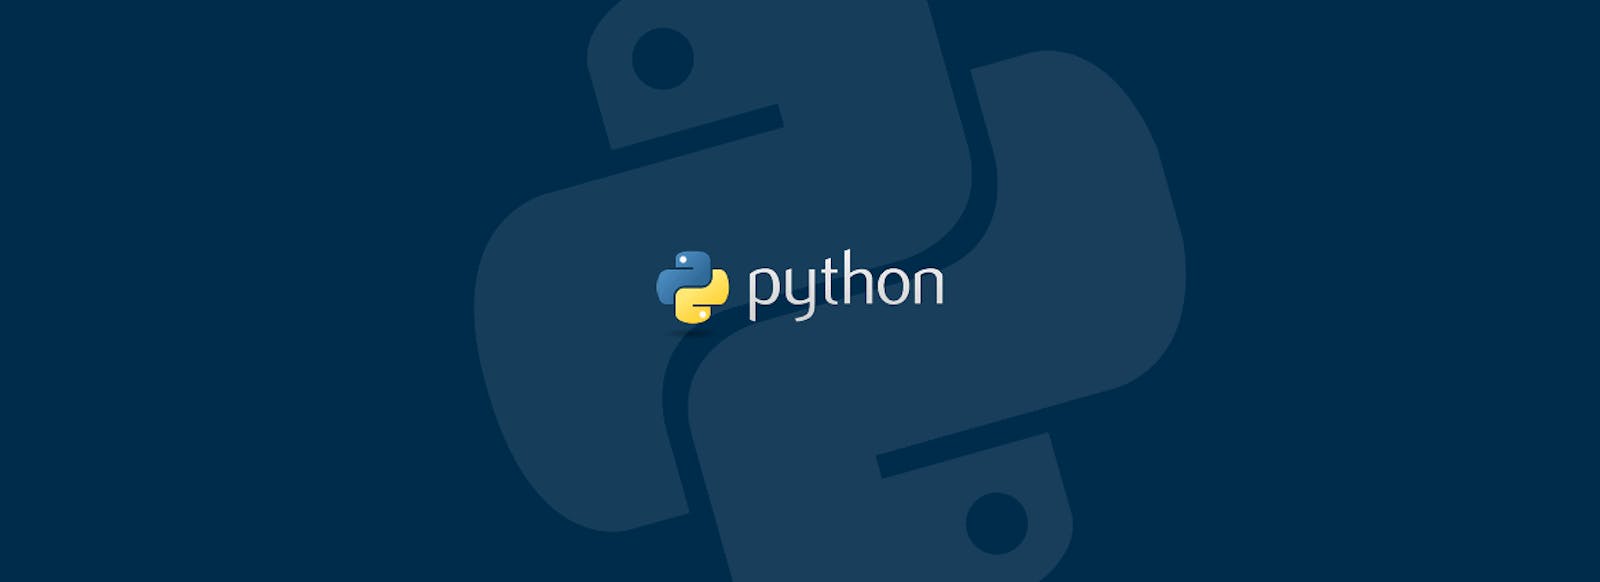 Python programming resources